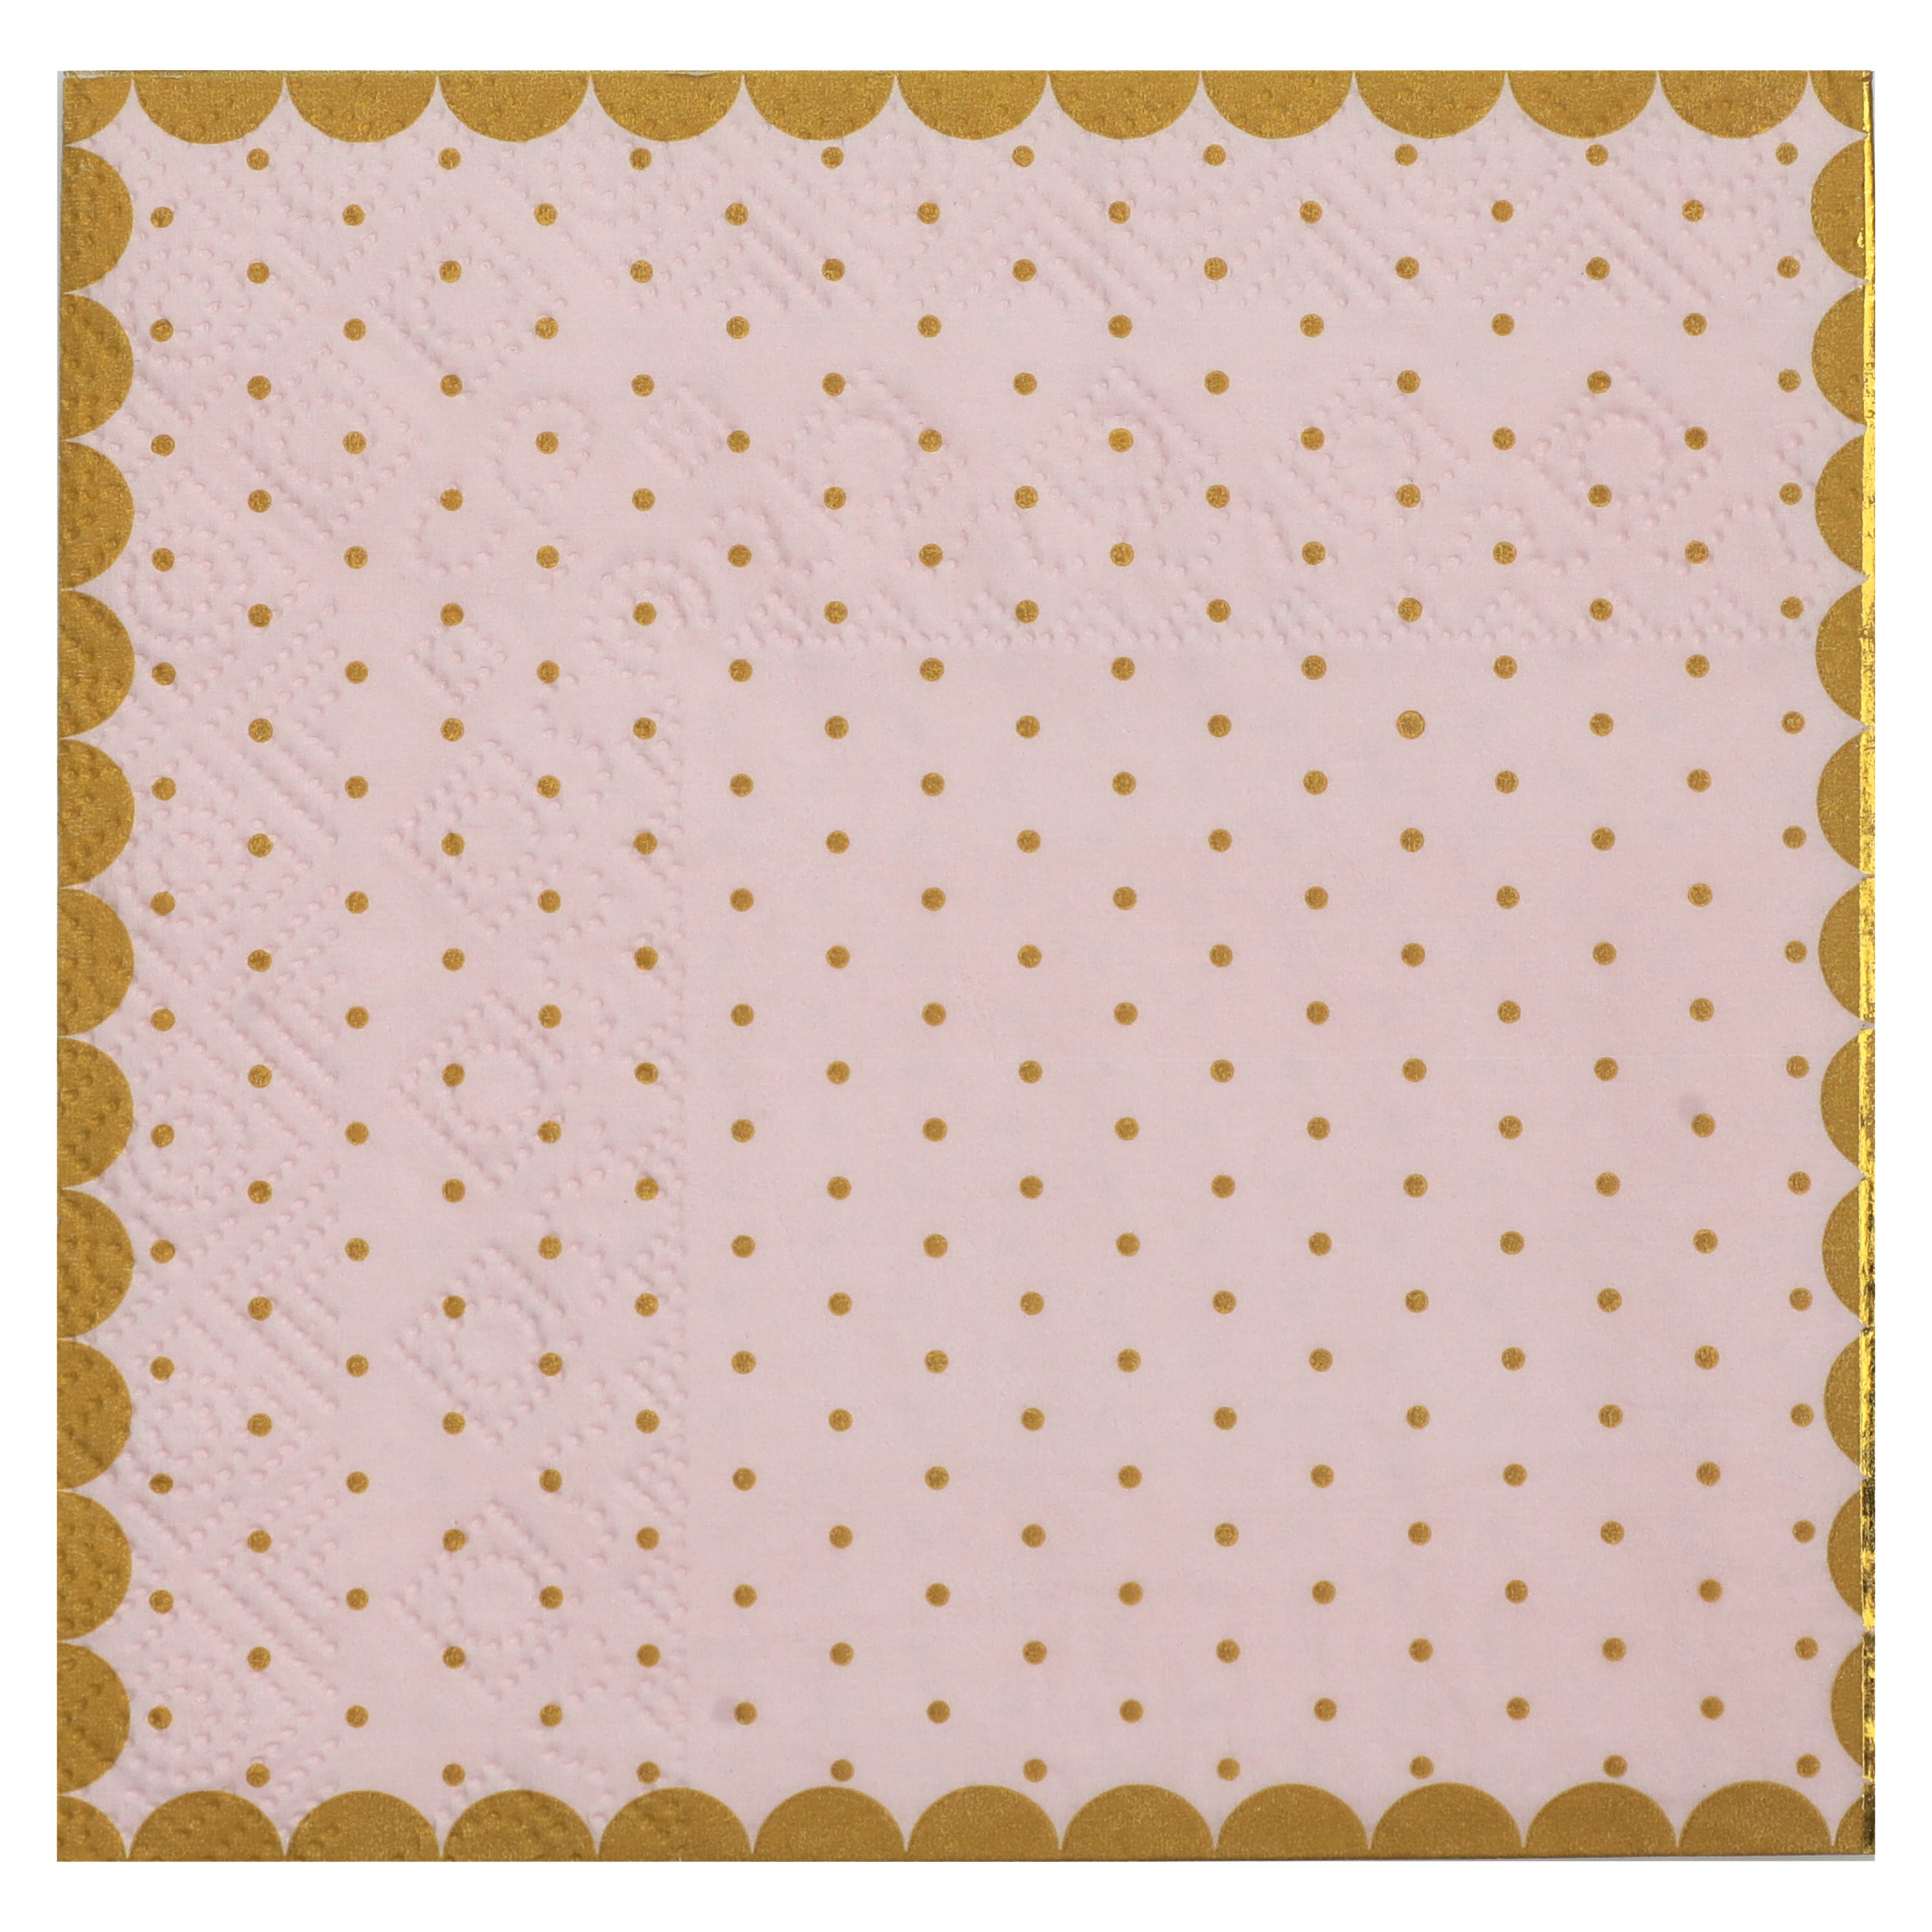 Santex papieren servetten - stippen - Babyshower meisje - 20x stuks - 25 x 25 cm - roze/goud